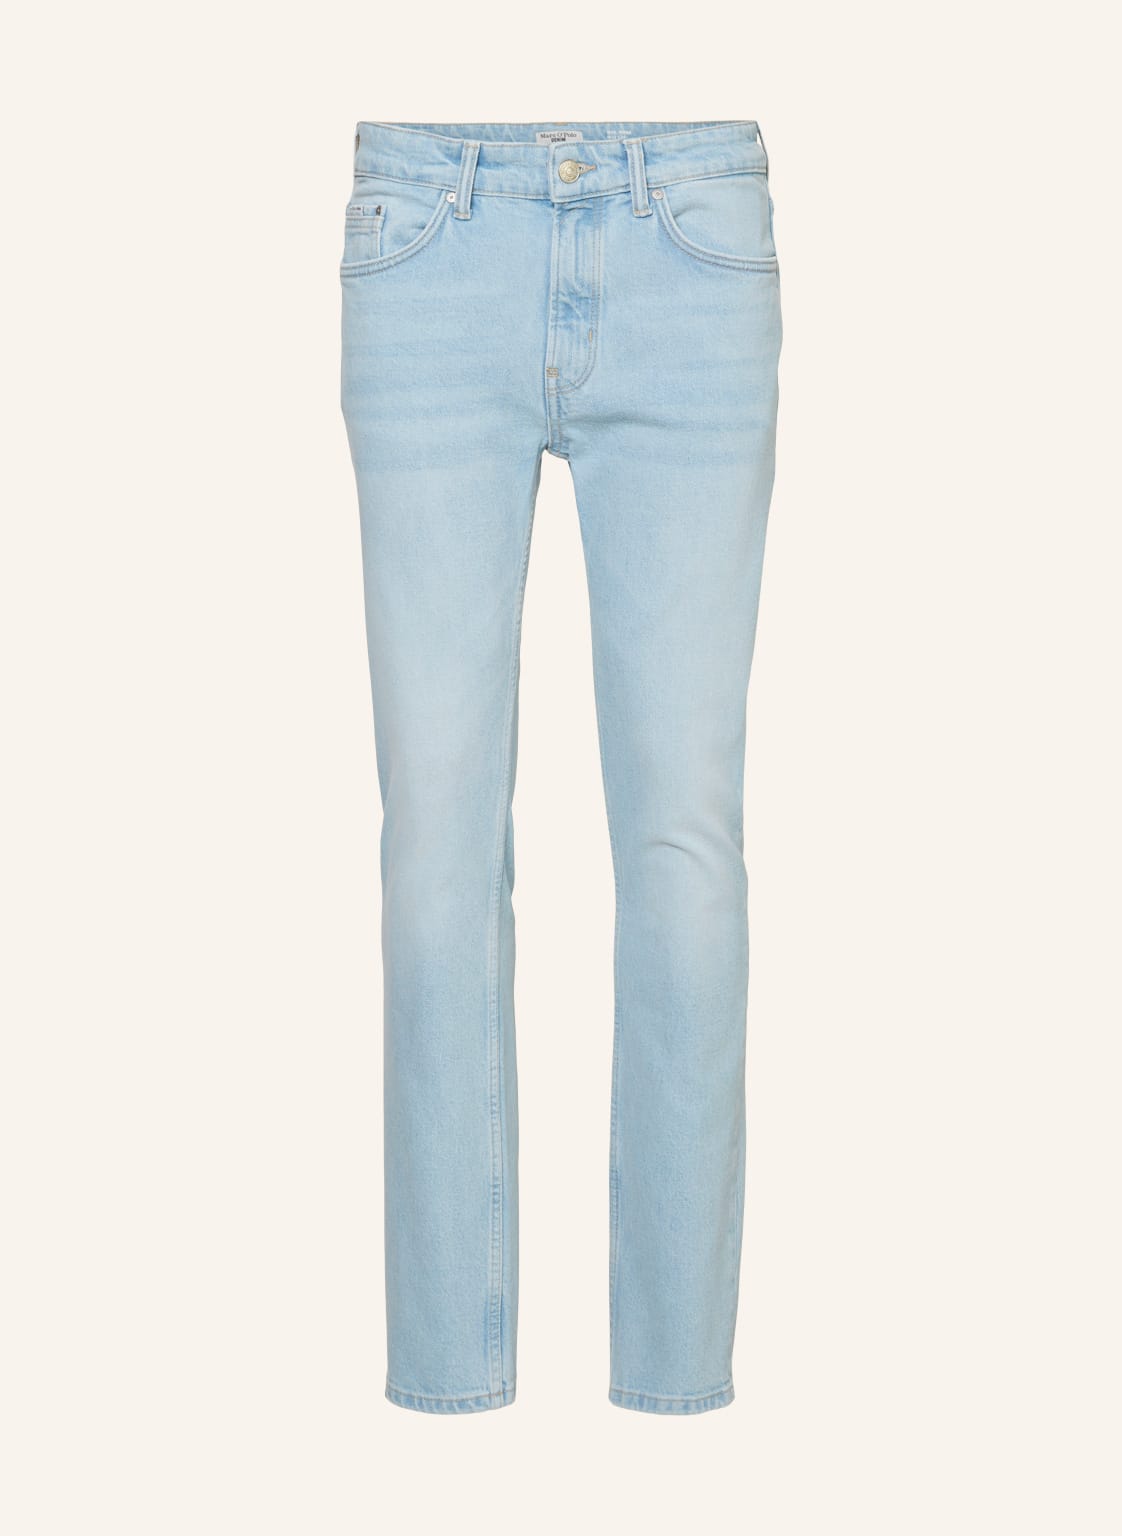 Marc O'polo Denim Jeans Modell Vidar Slim blau von Marc O'Polo DENIM